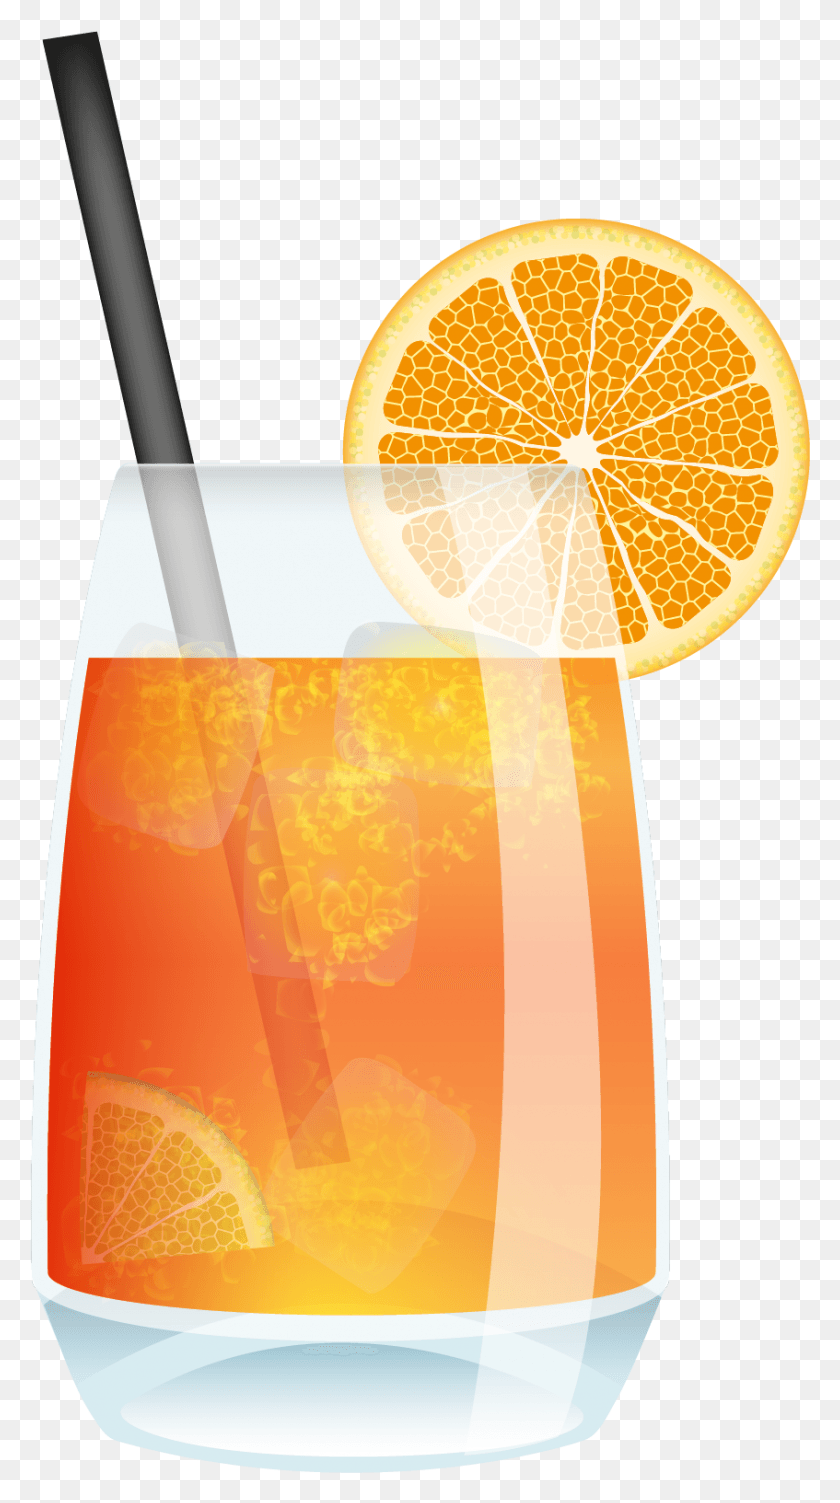 847x1568 Descargar Png Jugo De Naranja Bebidas Gaseosas Harvey Wallbanger Sea Breeze Imagen De Dibujos Animados De Un Jugo, Bebida, Alcohol Hd Png